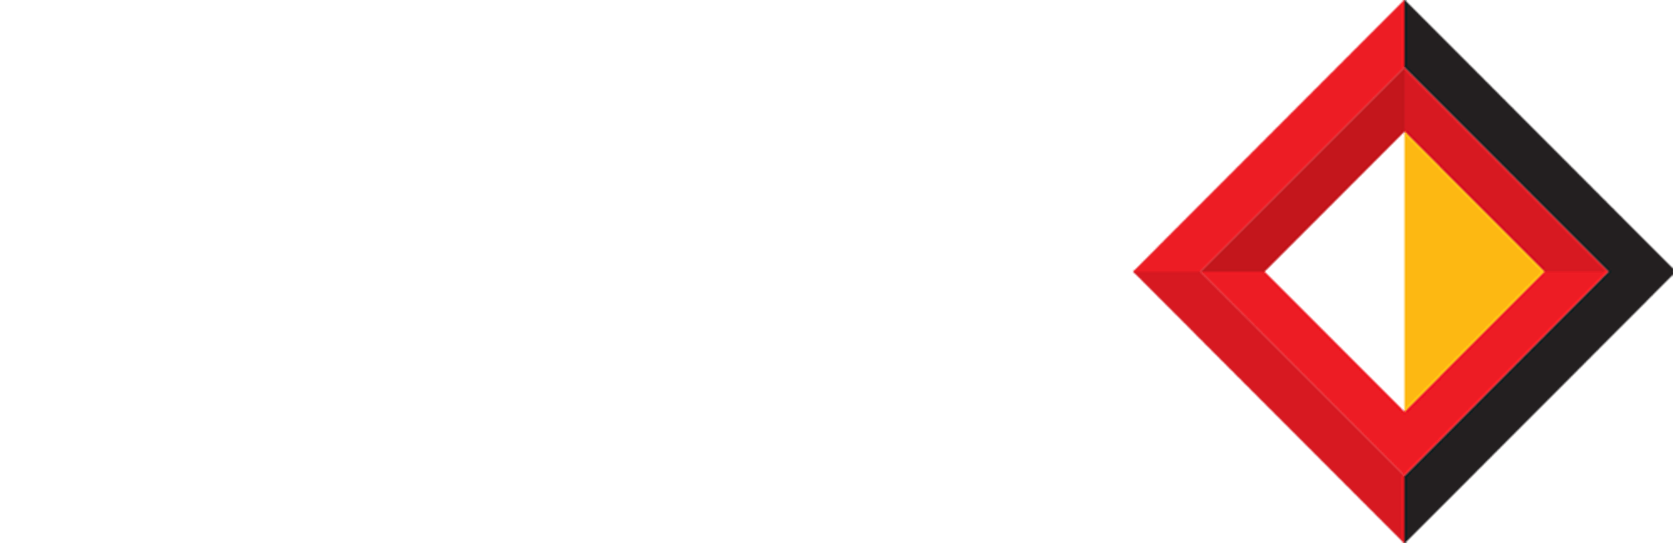 Logo IASI